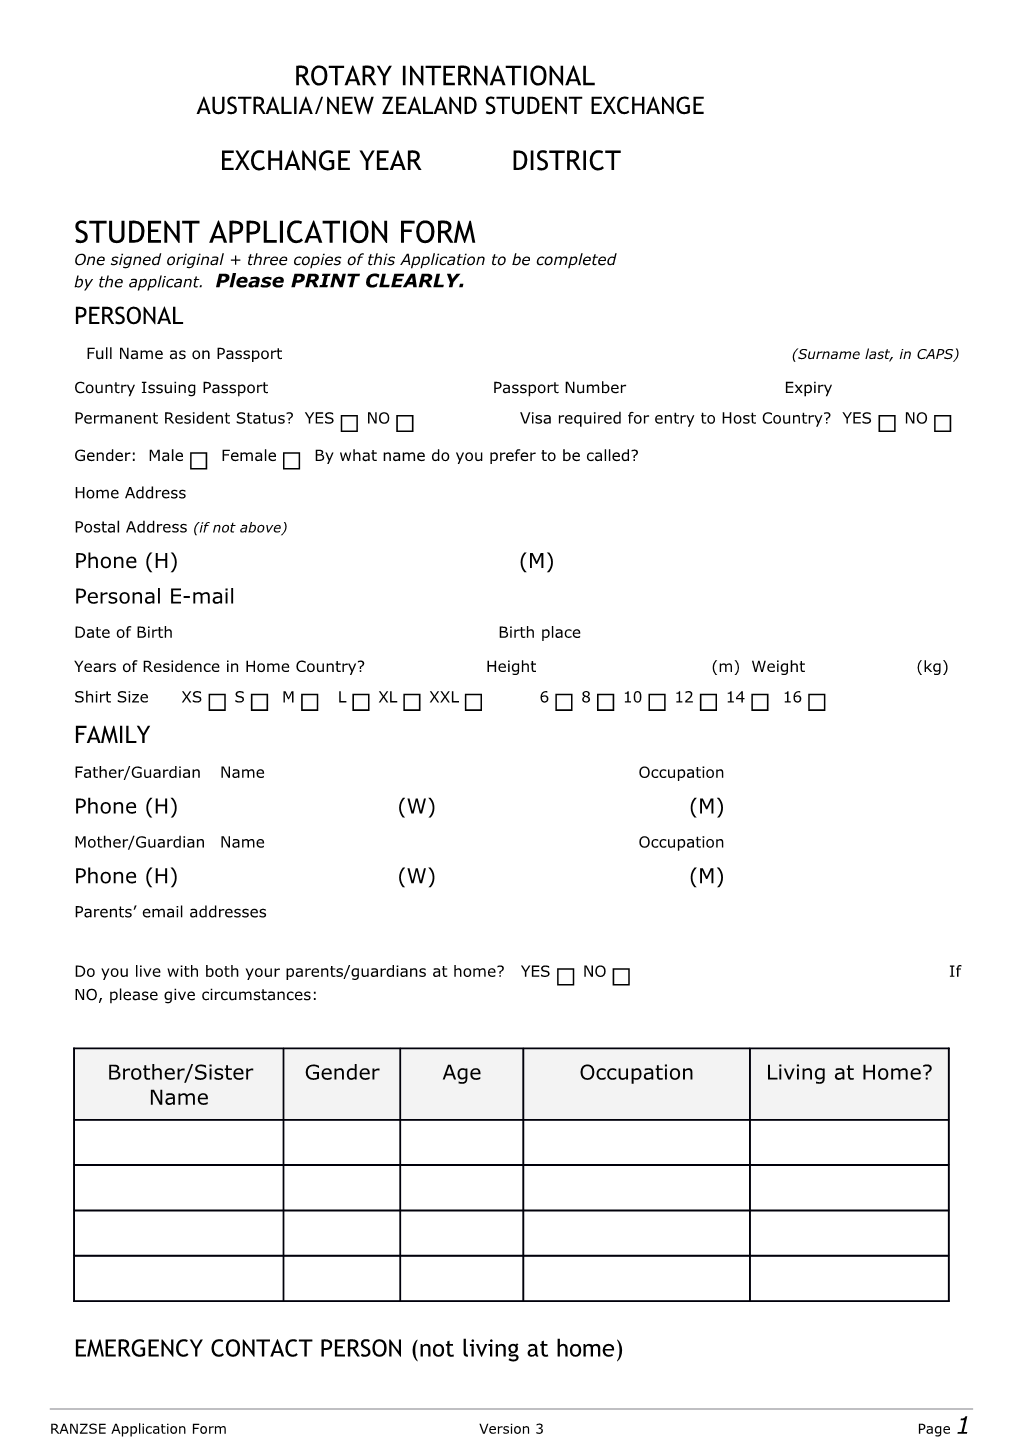 RANZSE Application Form 2005